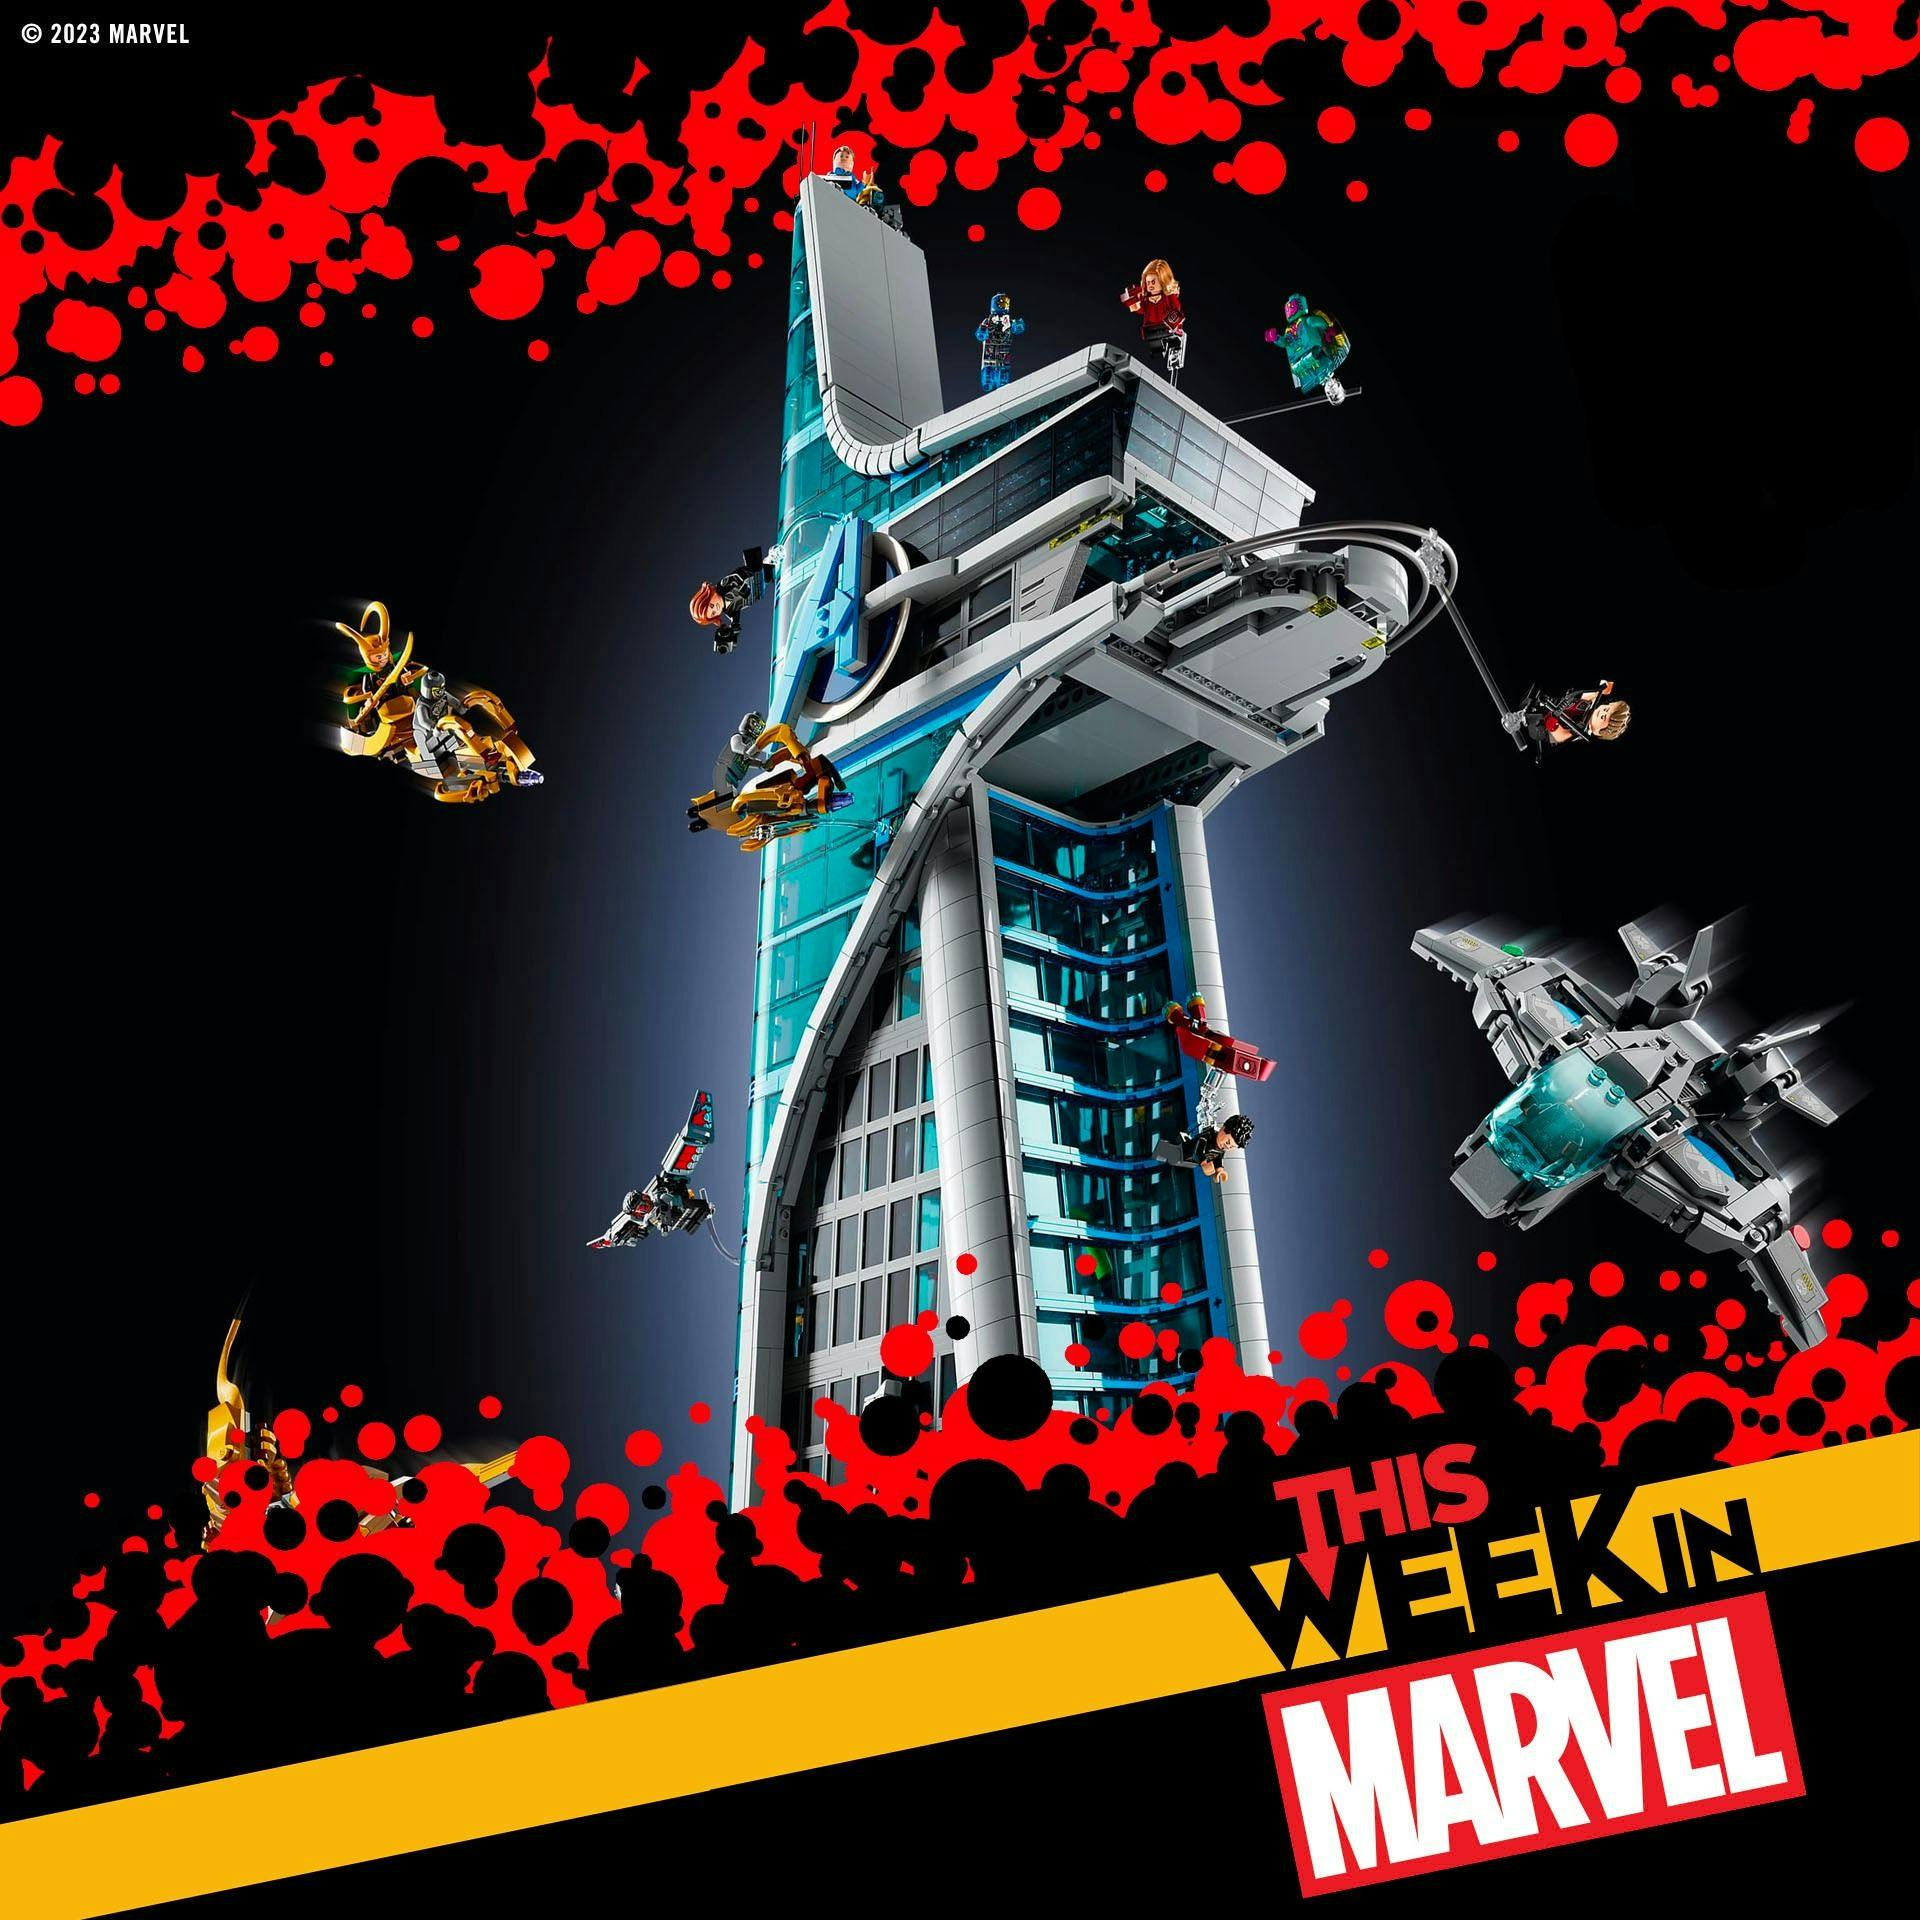 LEGO Marvel’s Avengers Tower, Gang War Begins, Marvel Mutts Take Over, and more!